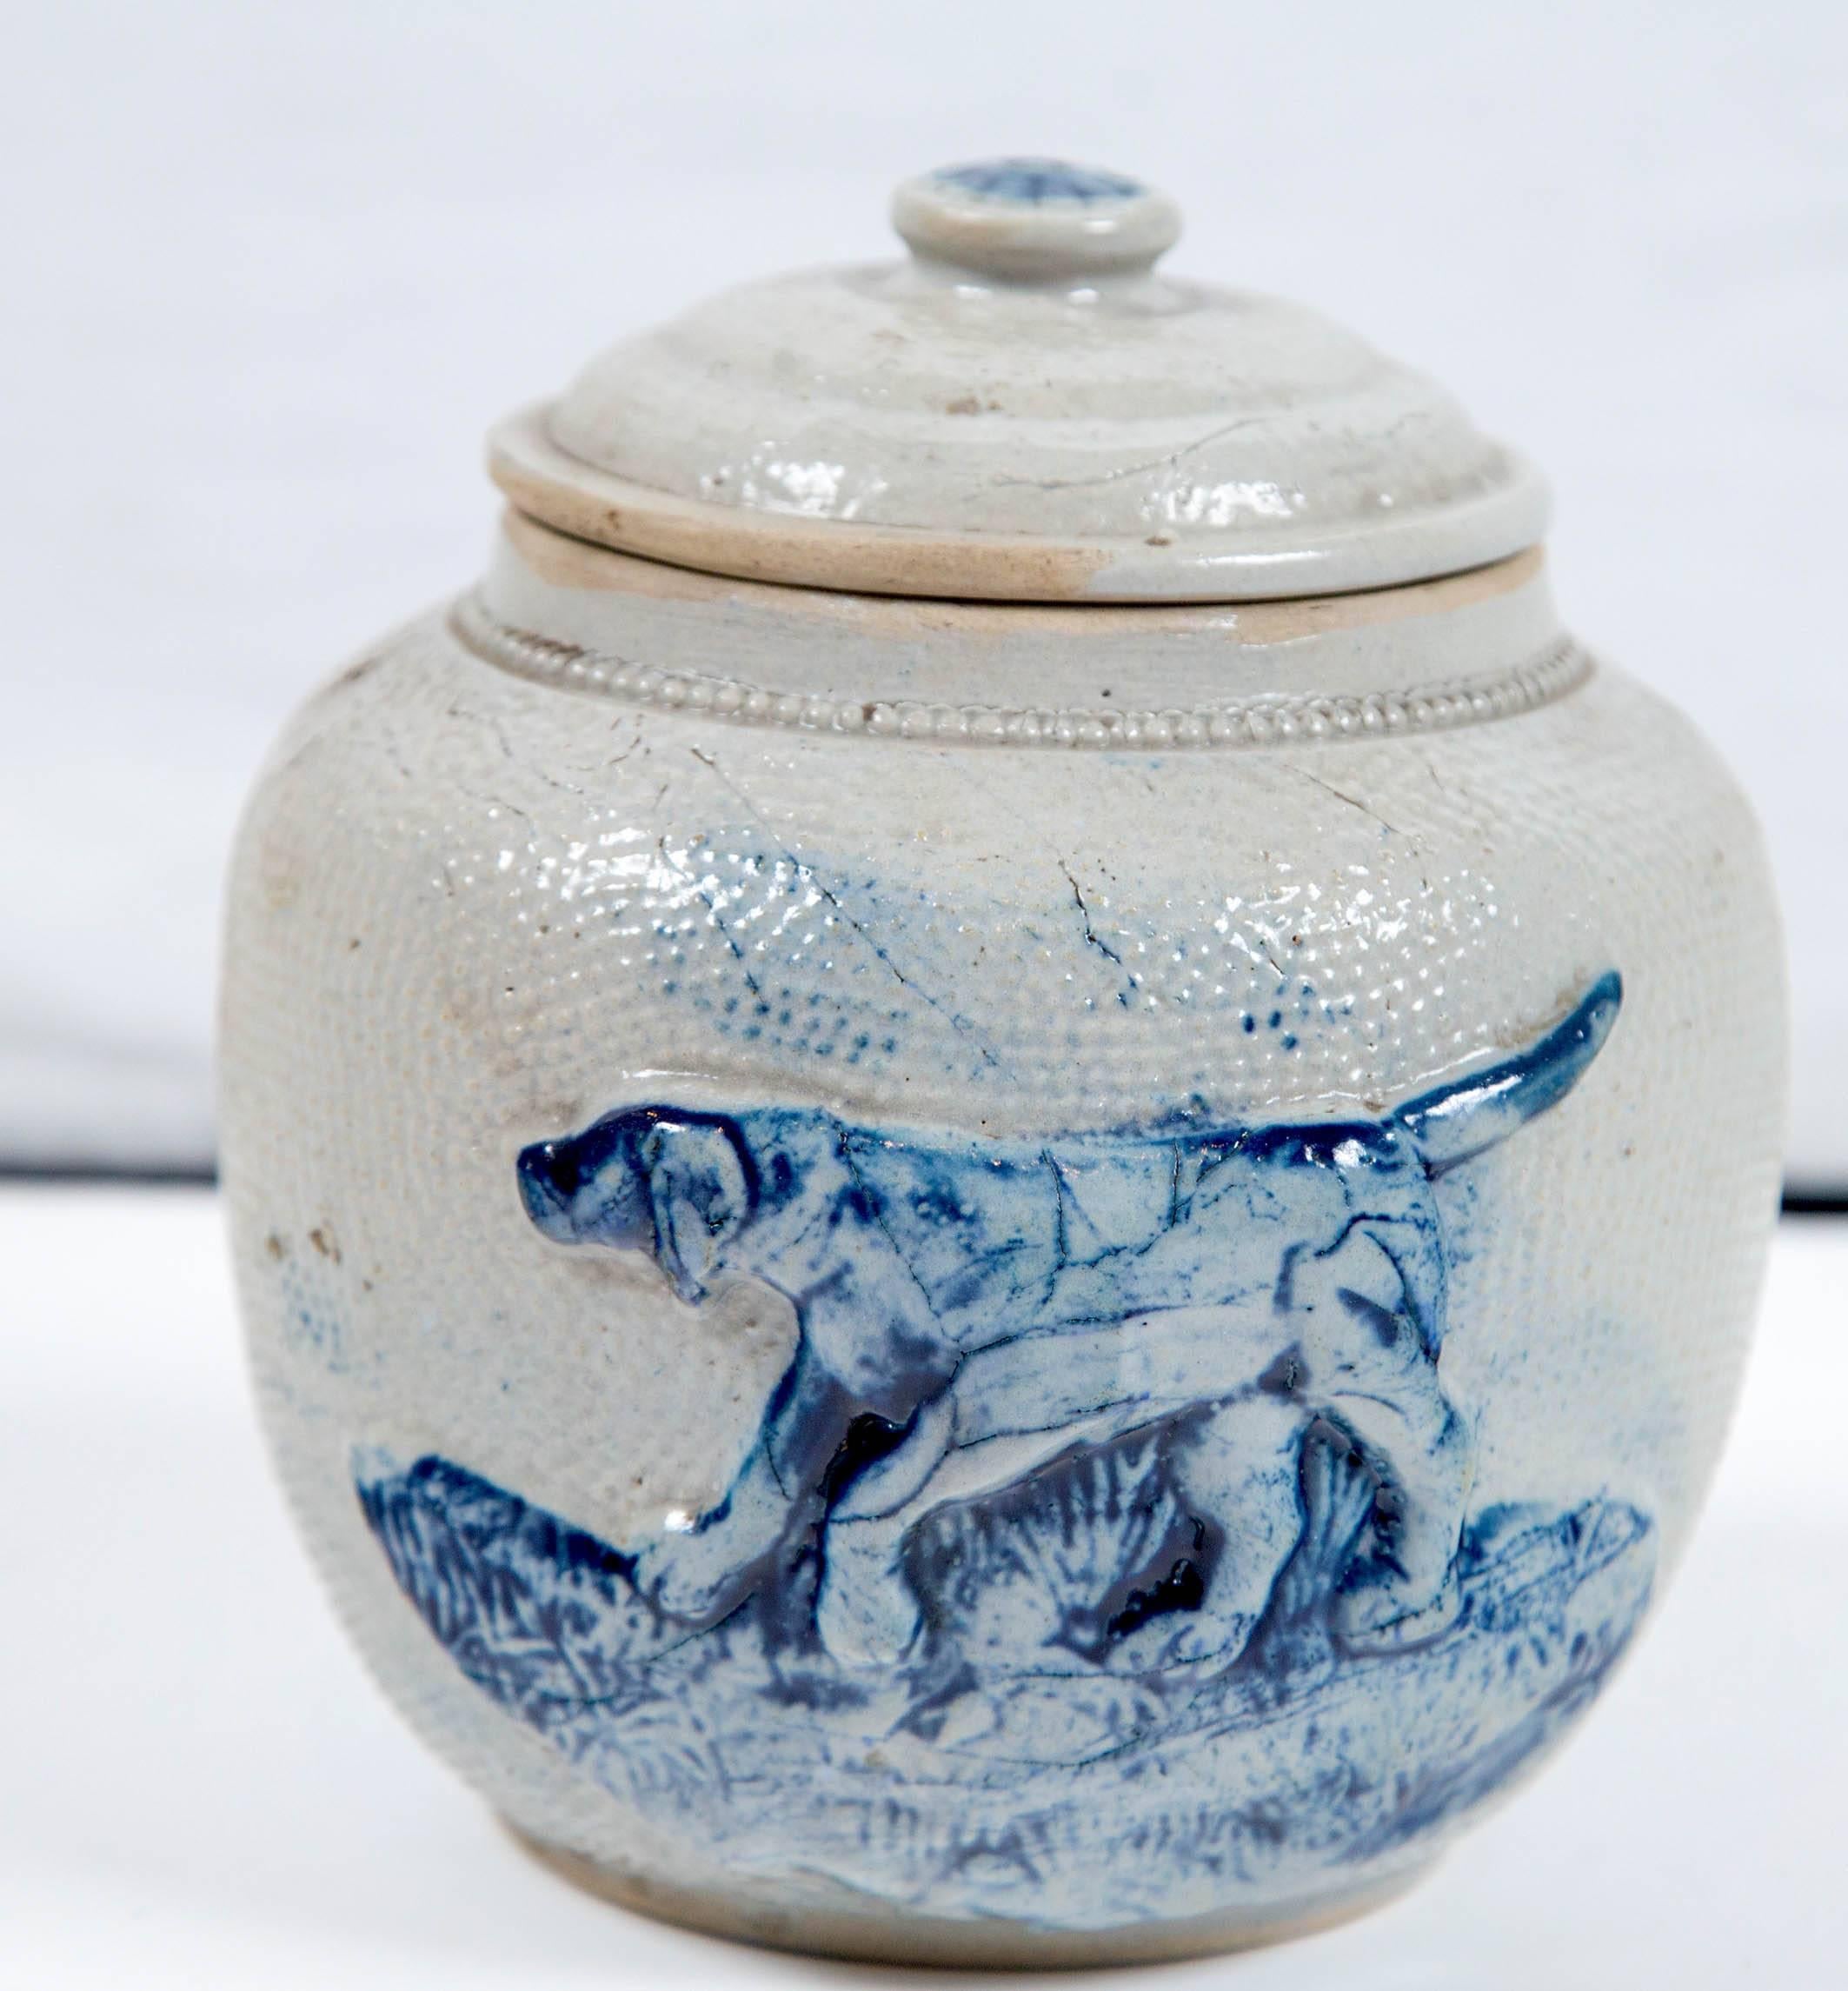 19th century blue glaze stoneware covered jar. Originally used as a humidor to store tobacco. Raised design in cobalt glaze depicting a hunting retriever dog.